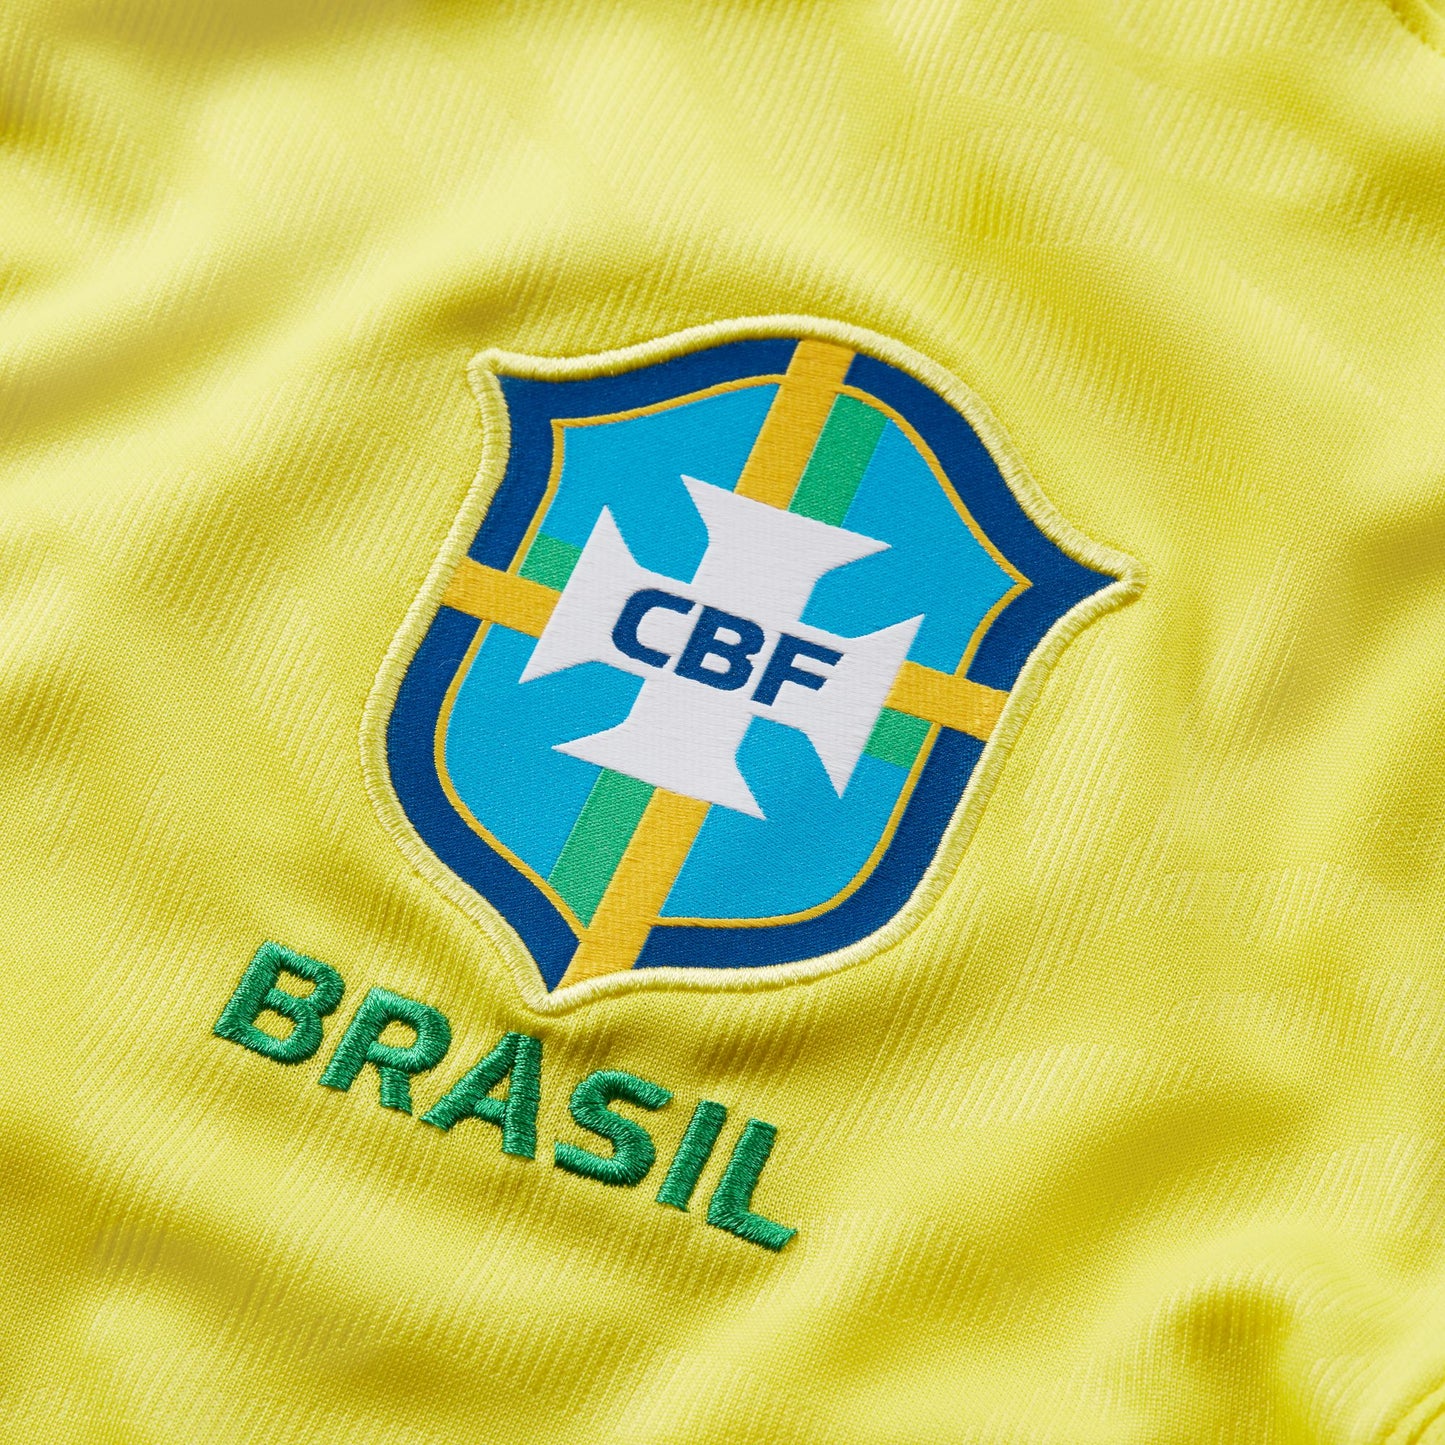 Camiseta Nike Stadium de corte recto de local de Brasil 2023